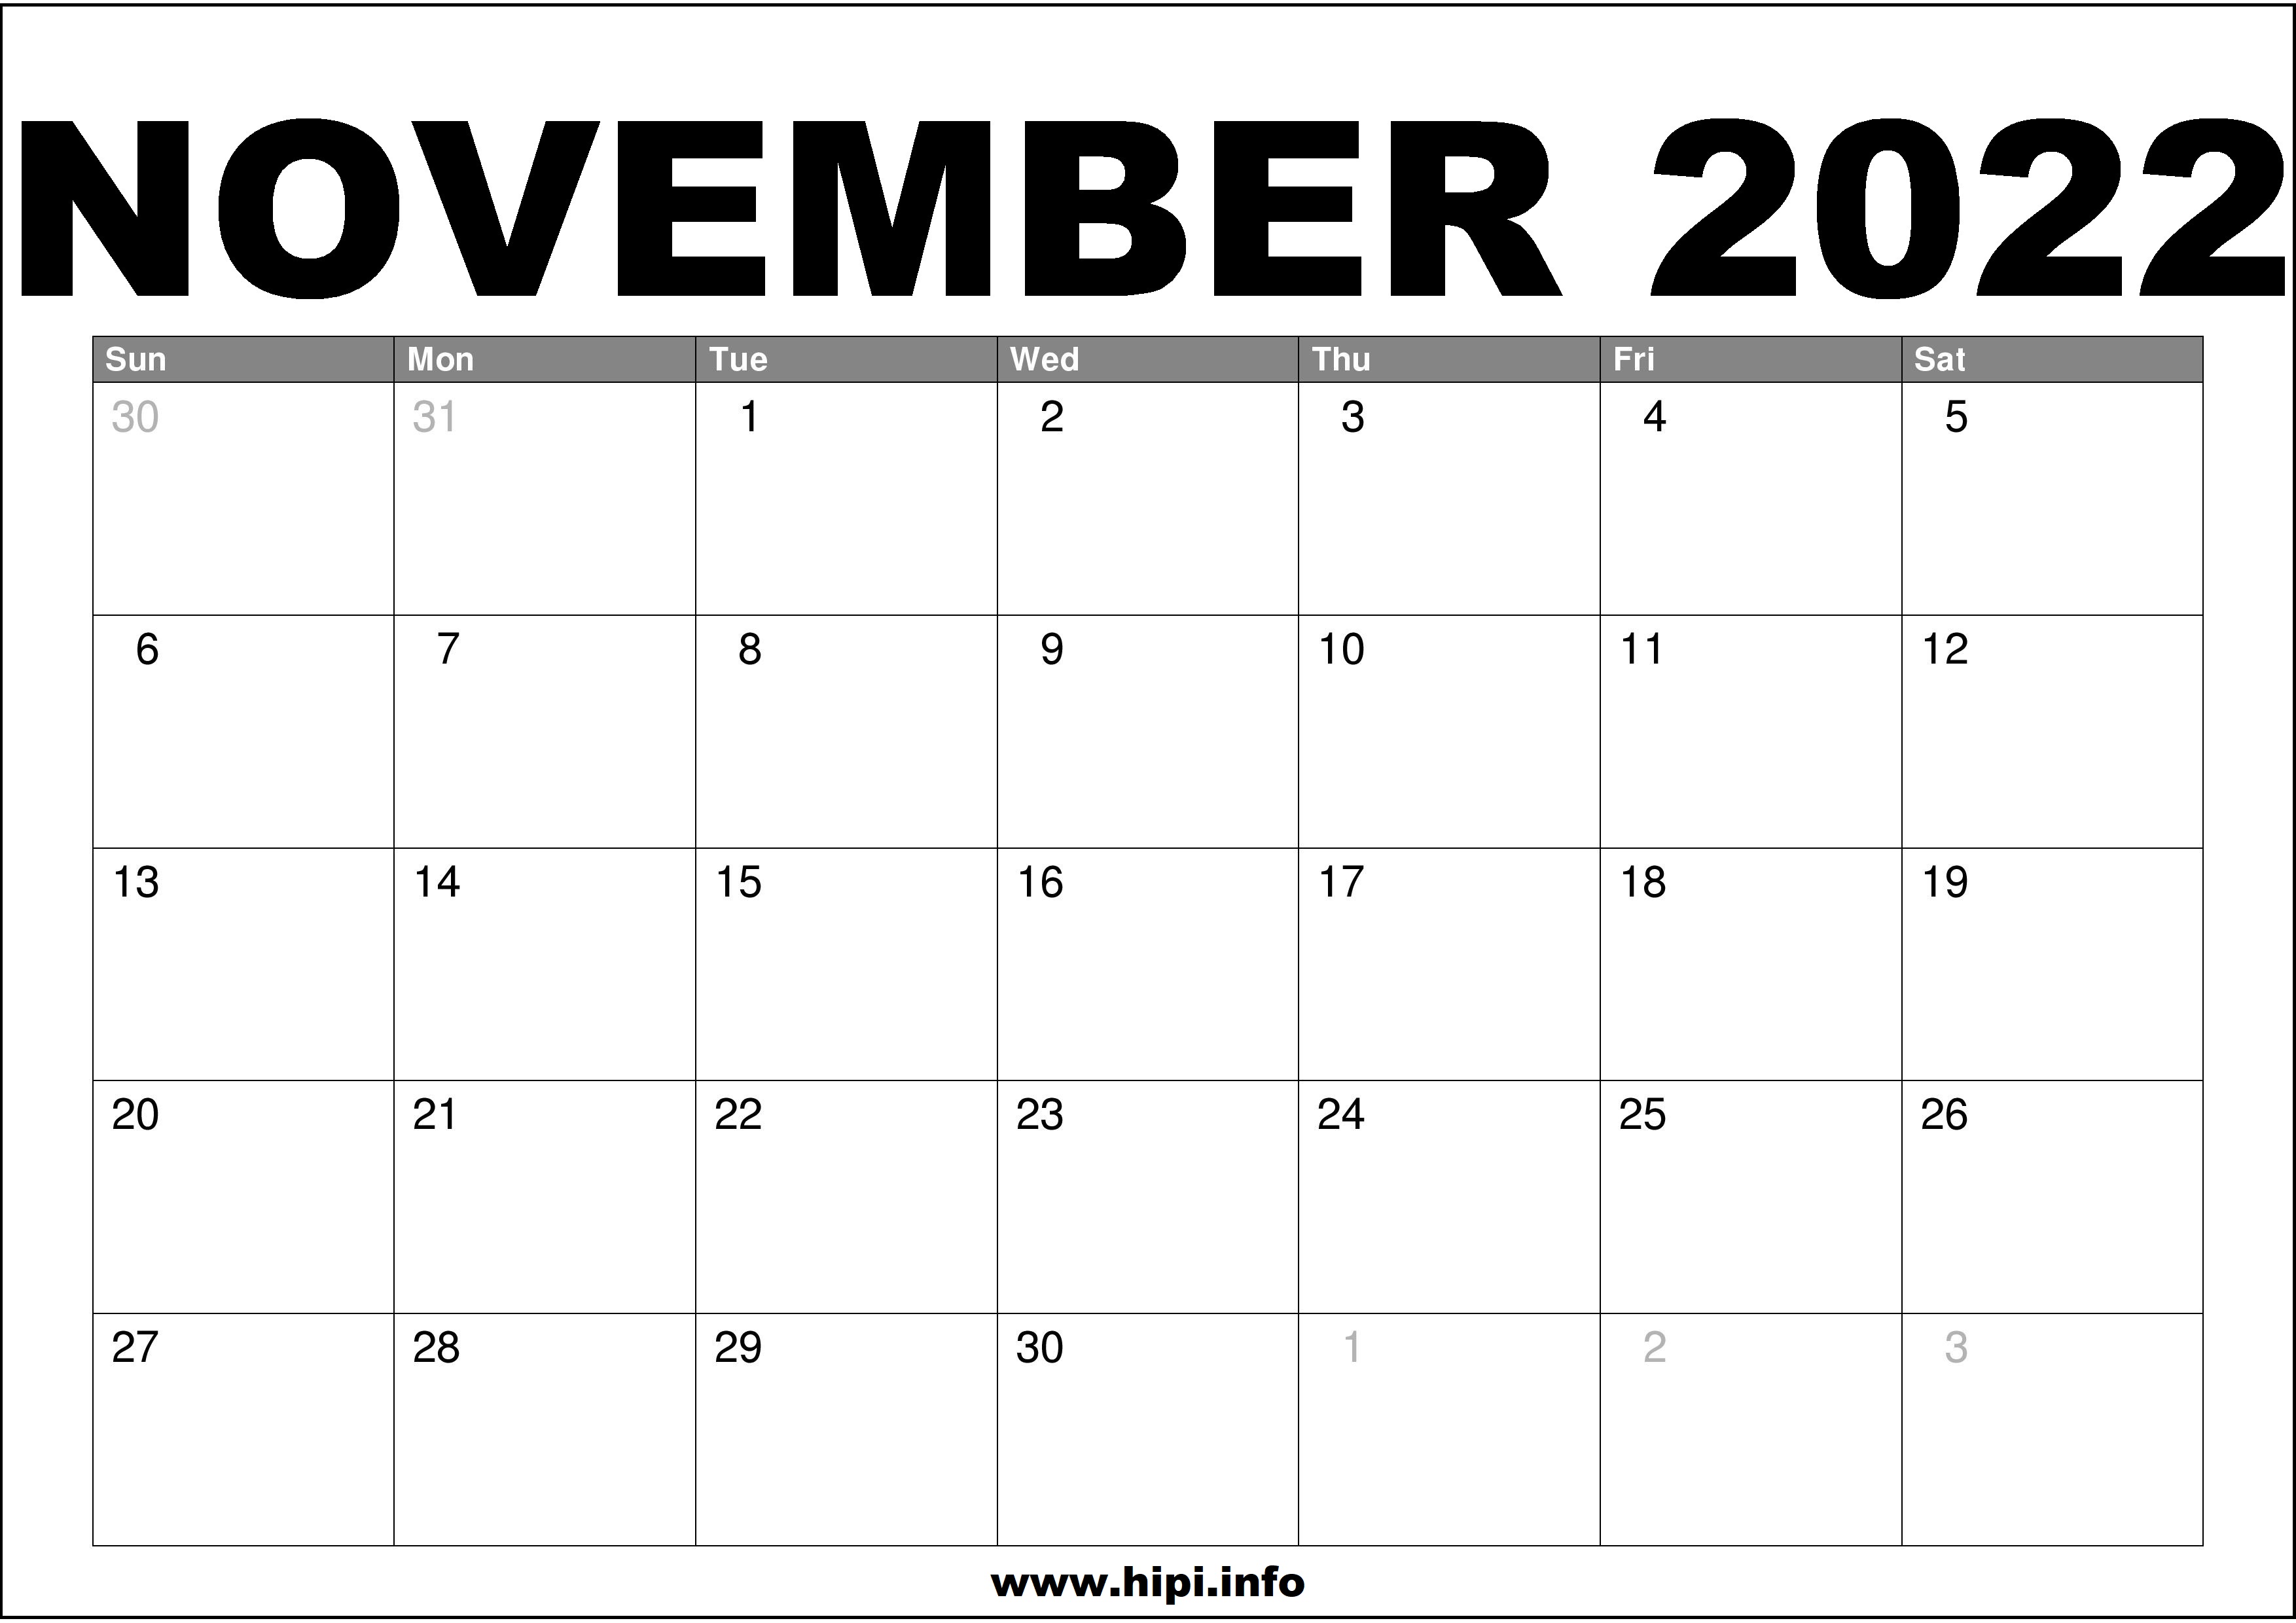 Free Printable November 2022 Calendar November 2022 Calendar Printable Free - Hipi.info | Calendars Printable Free